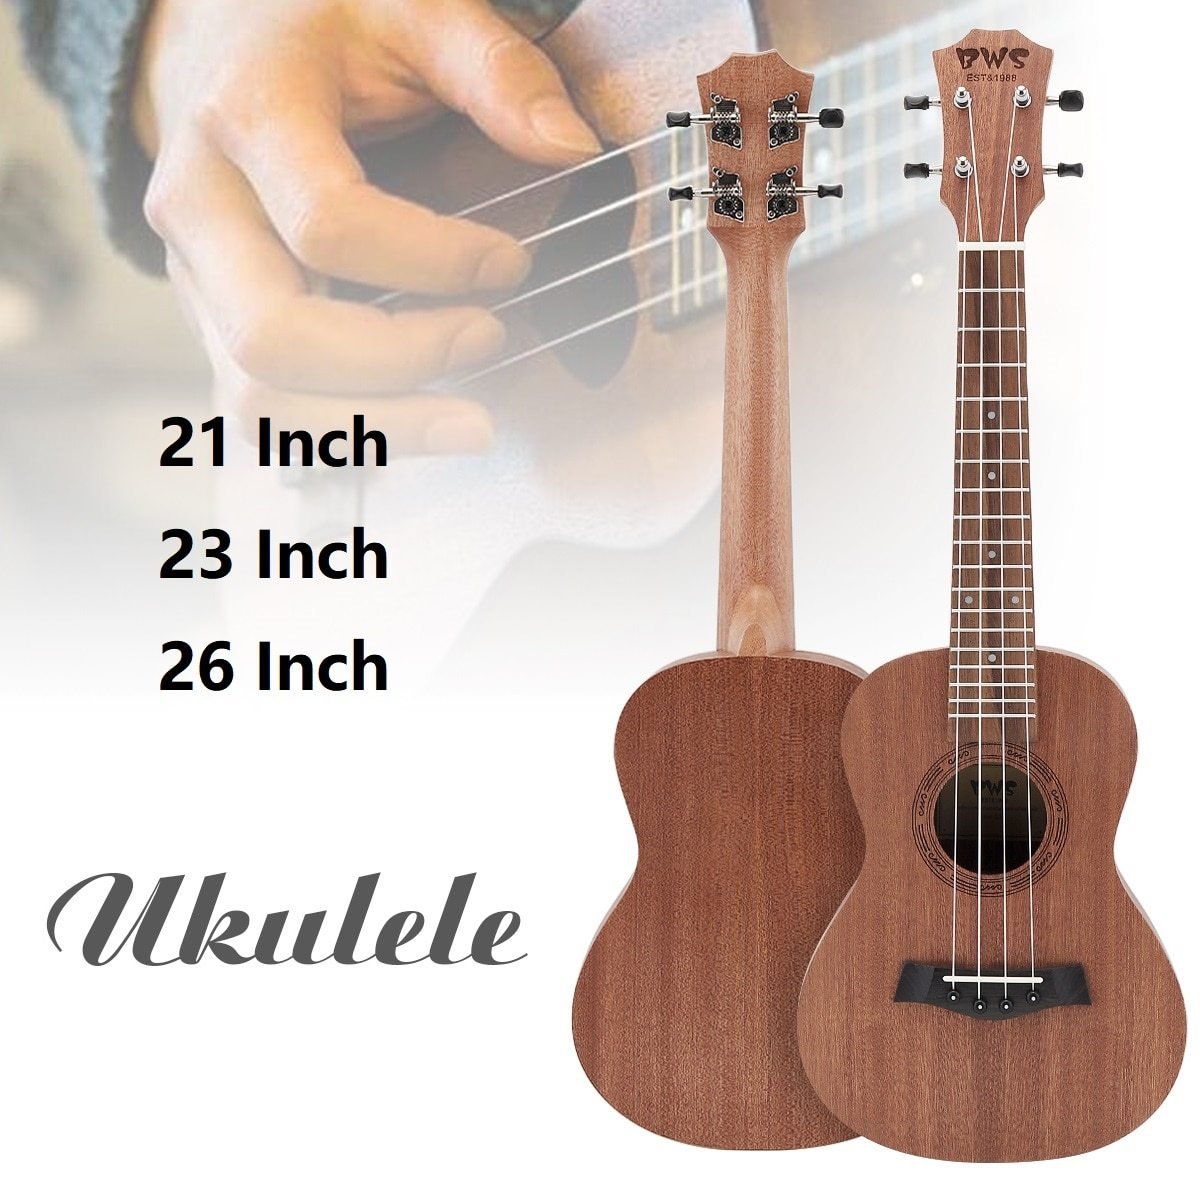 21 Inch /23 Inch / 26 Inch Concert Ukulele Hawaiian Guitar Four String Guitar Mahogany Wood Ukulele as Birthday Christmas Gifts - AKLOT